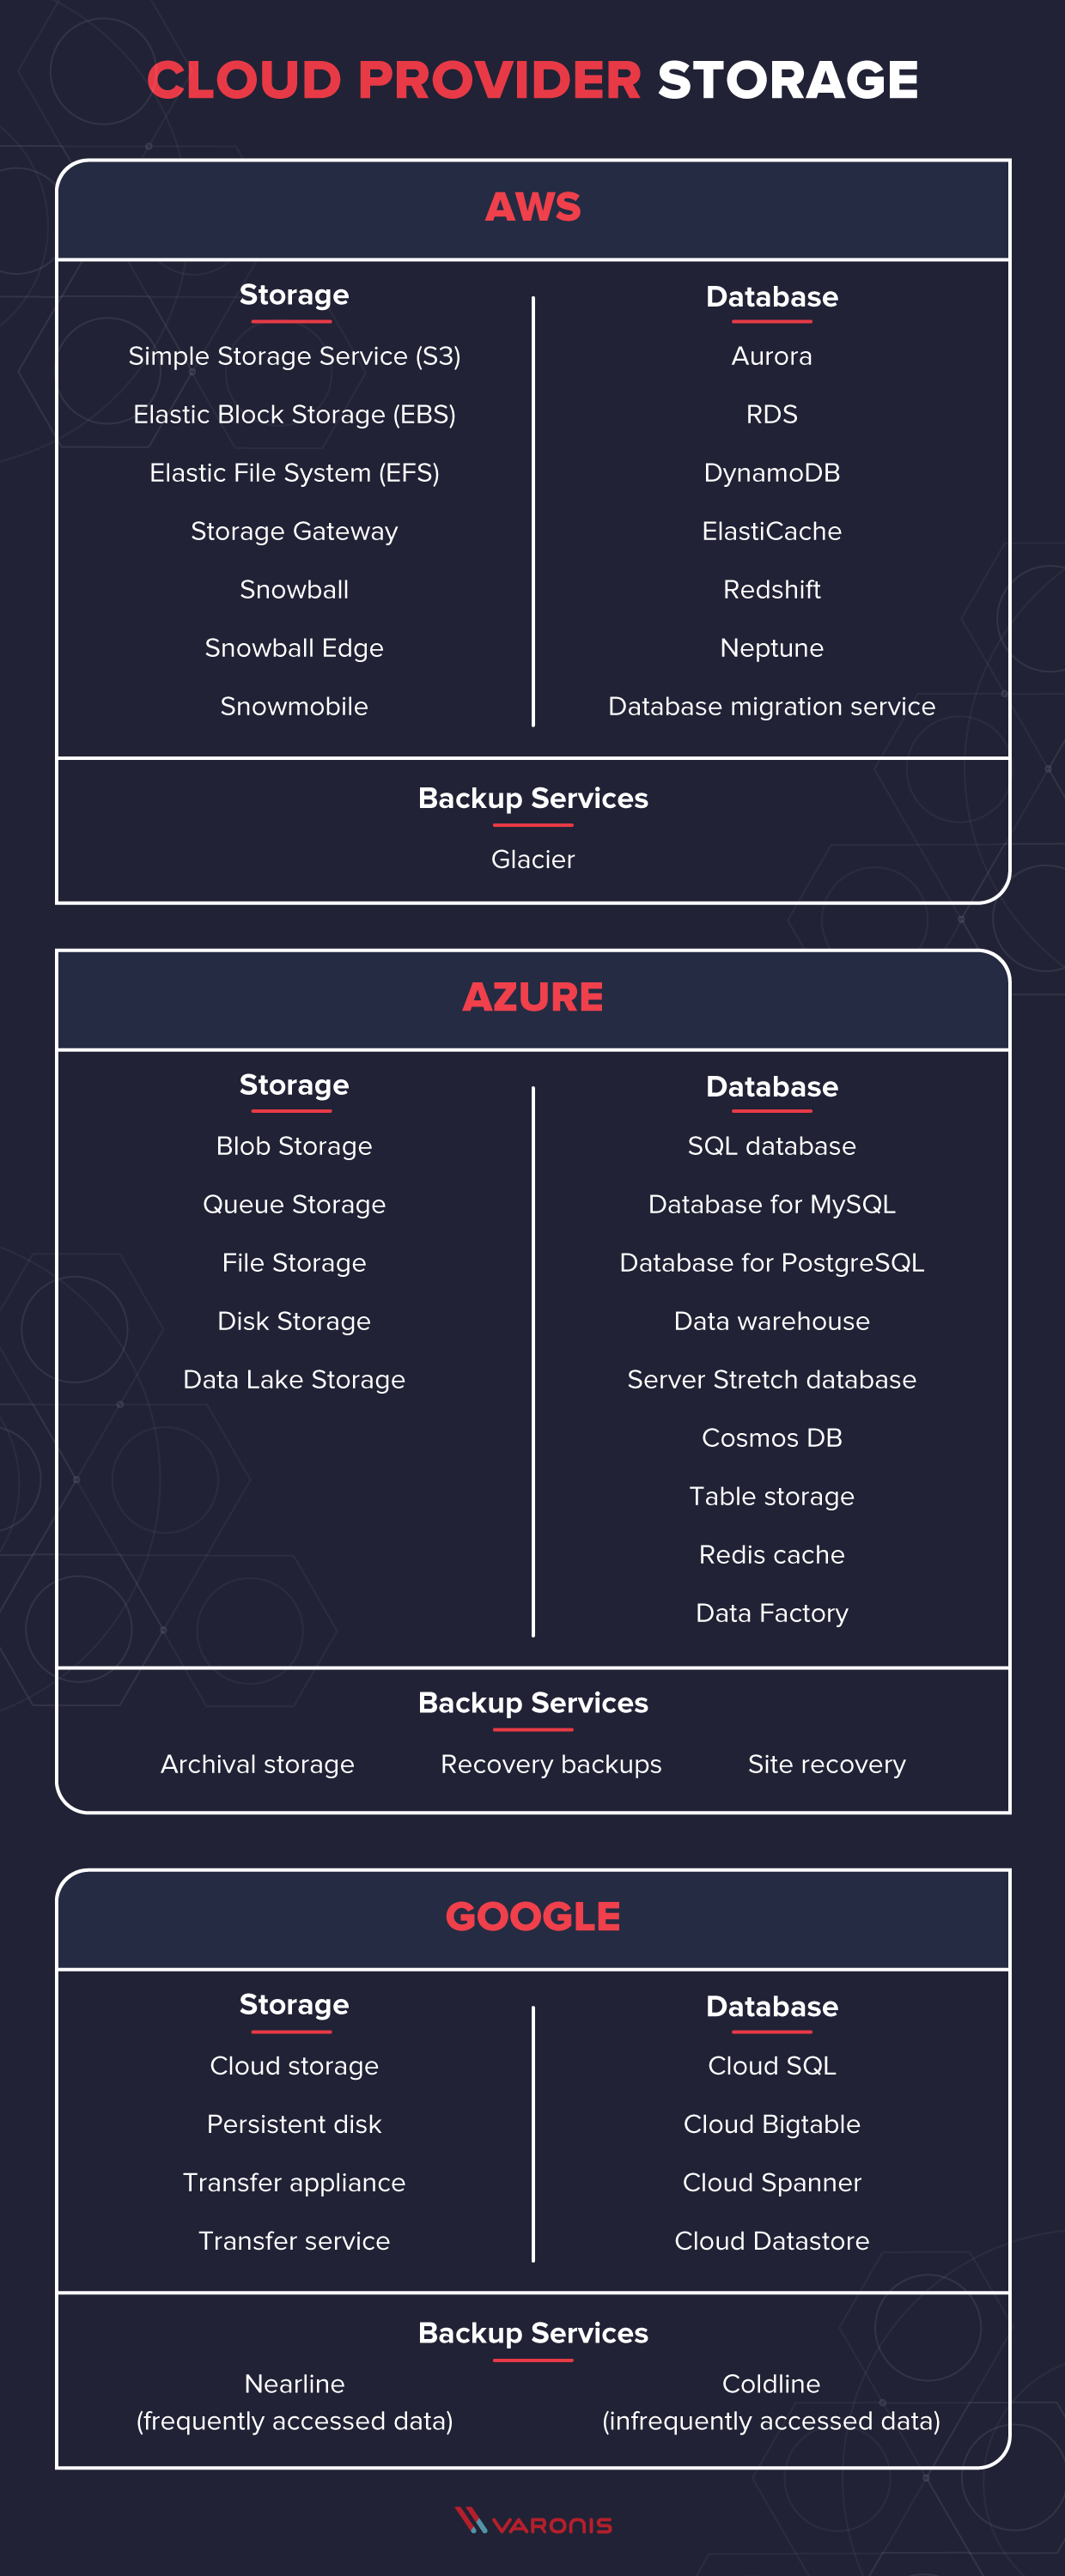 Cloud Provider Storage comparison: AWS vs. Azure vs. Google